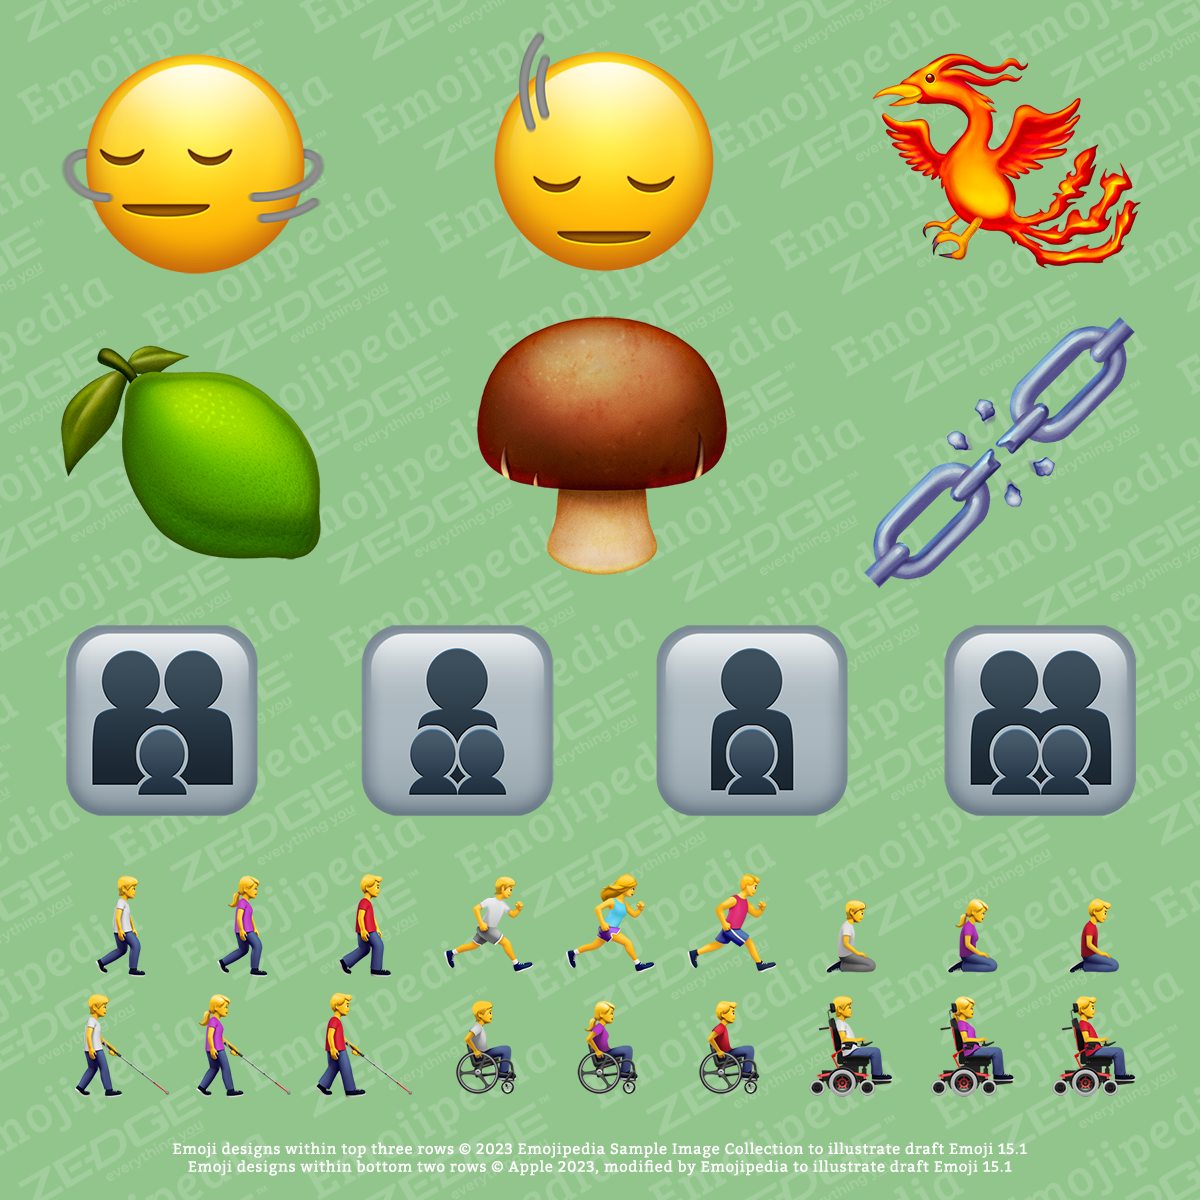 New Emojis in 2023-2024